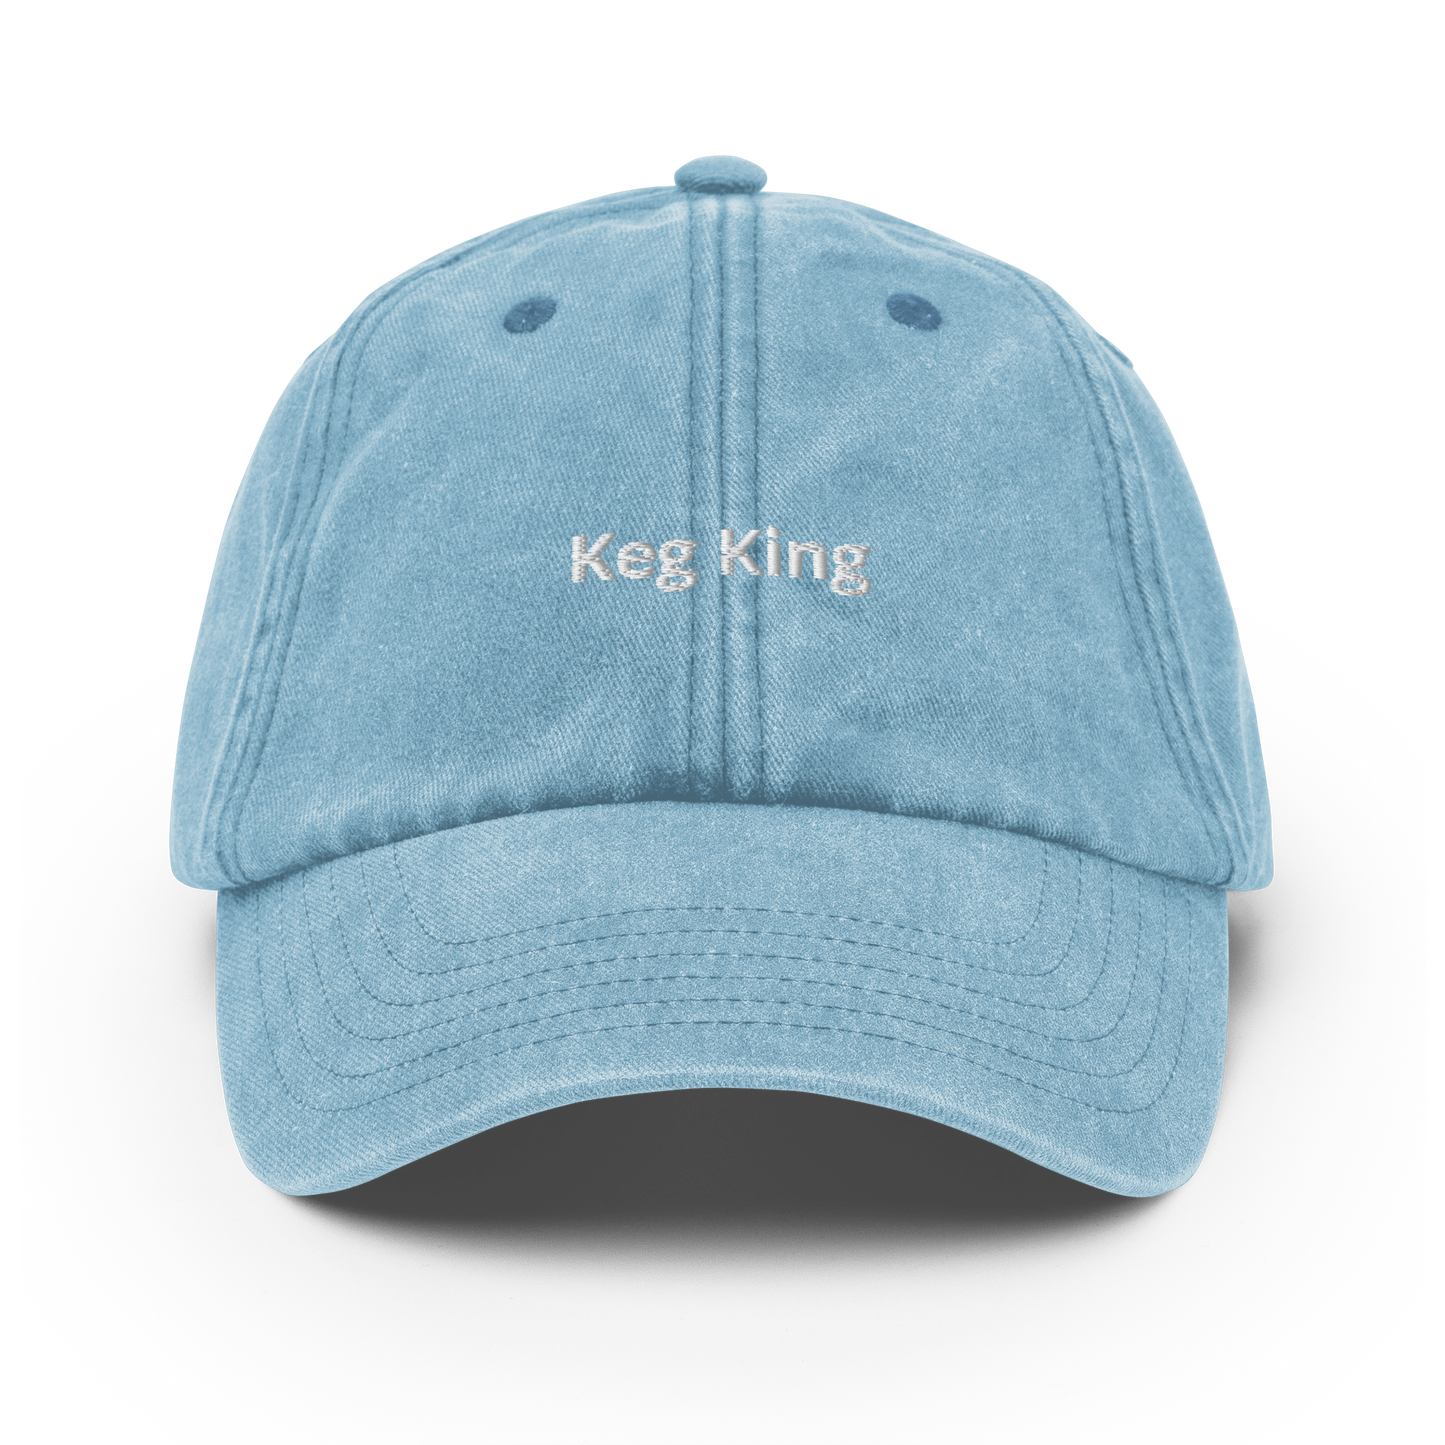 Keg King - Vintage Hat